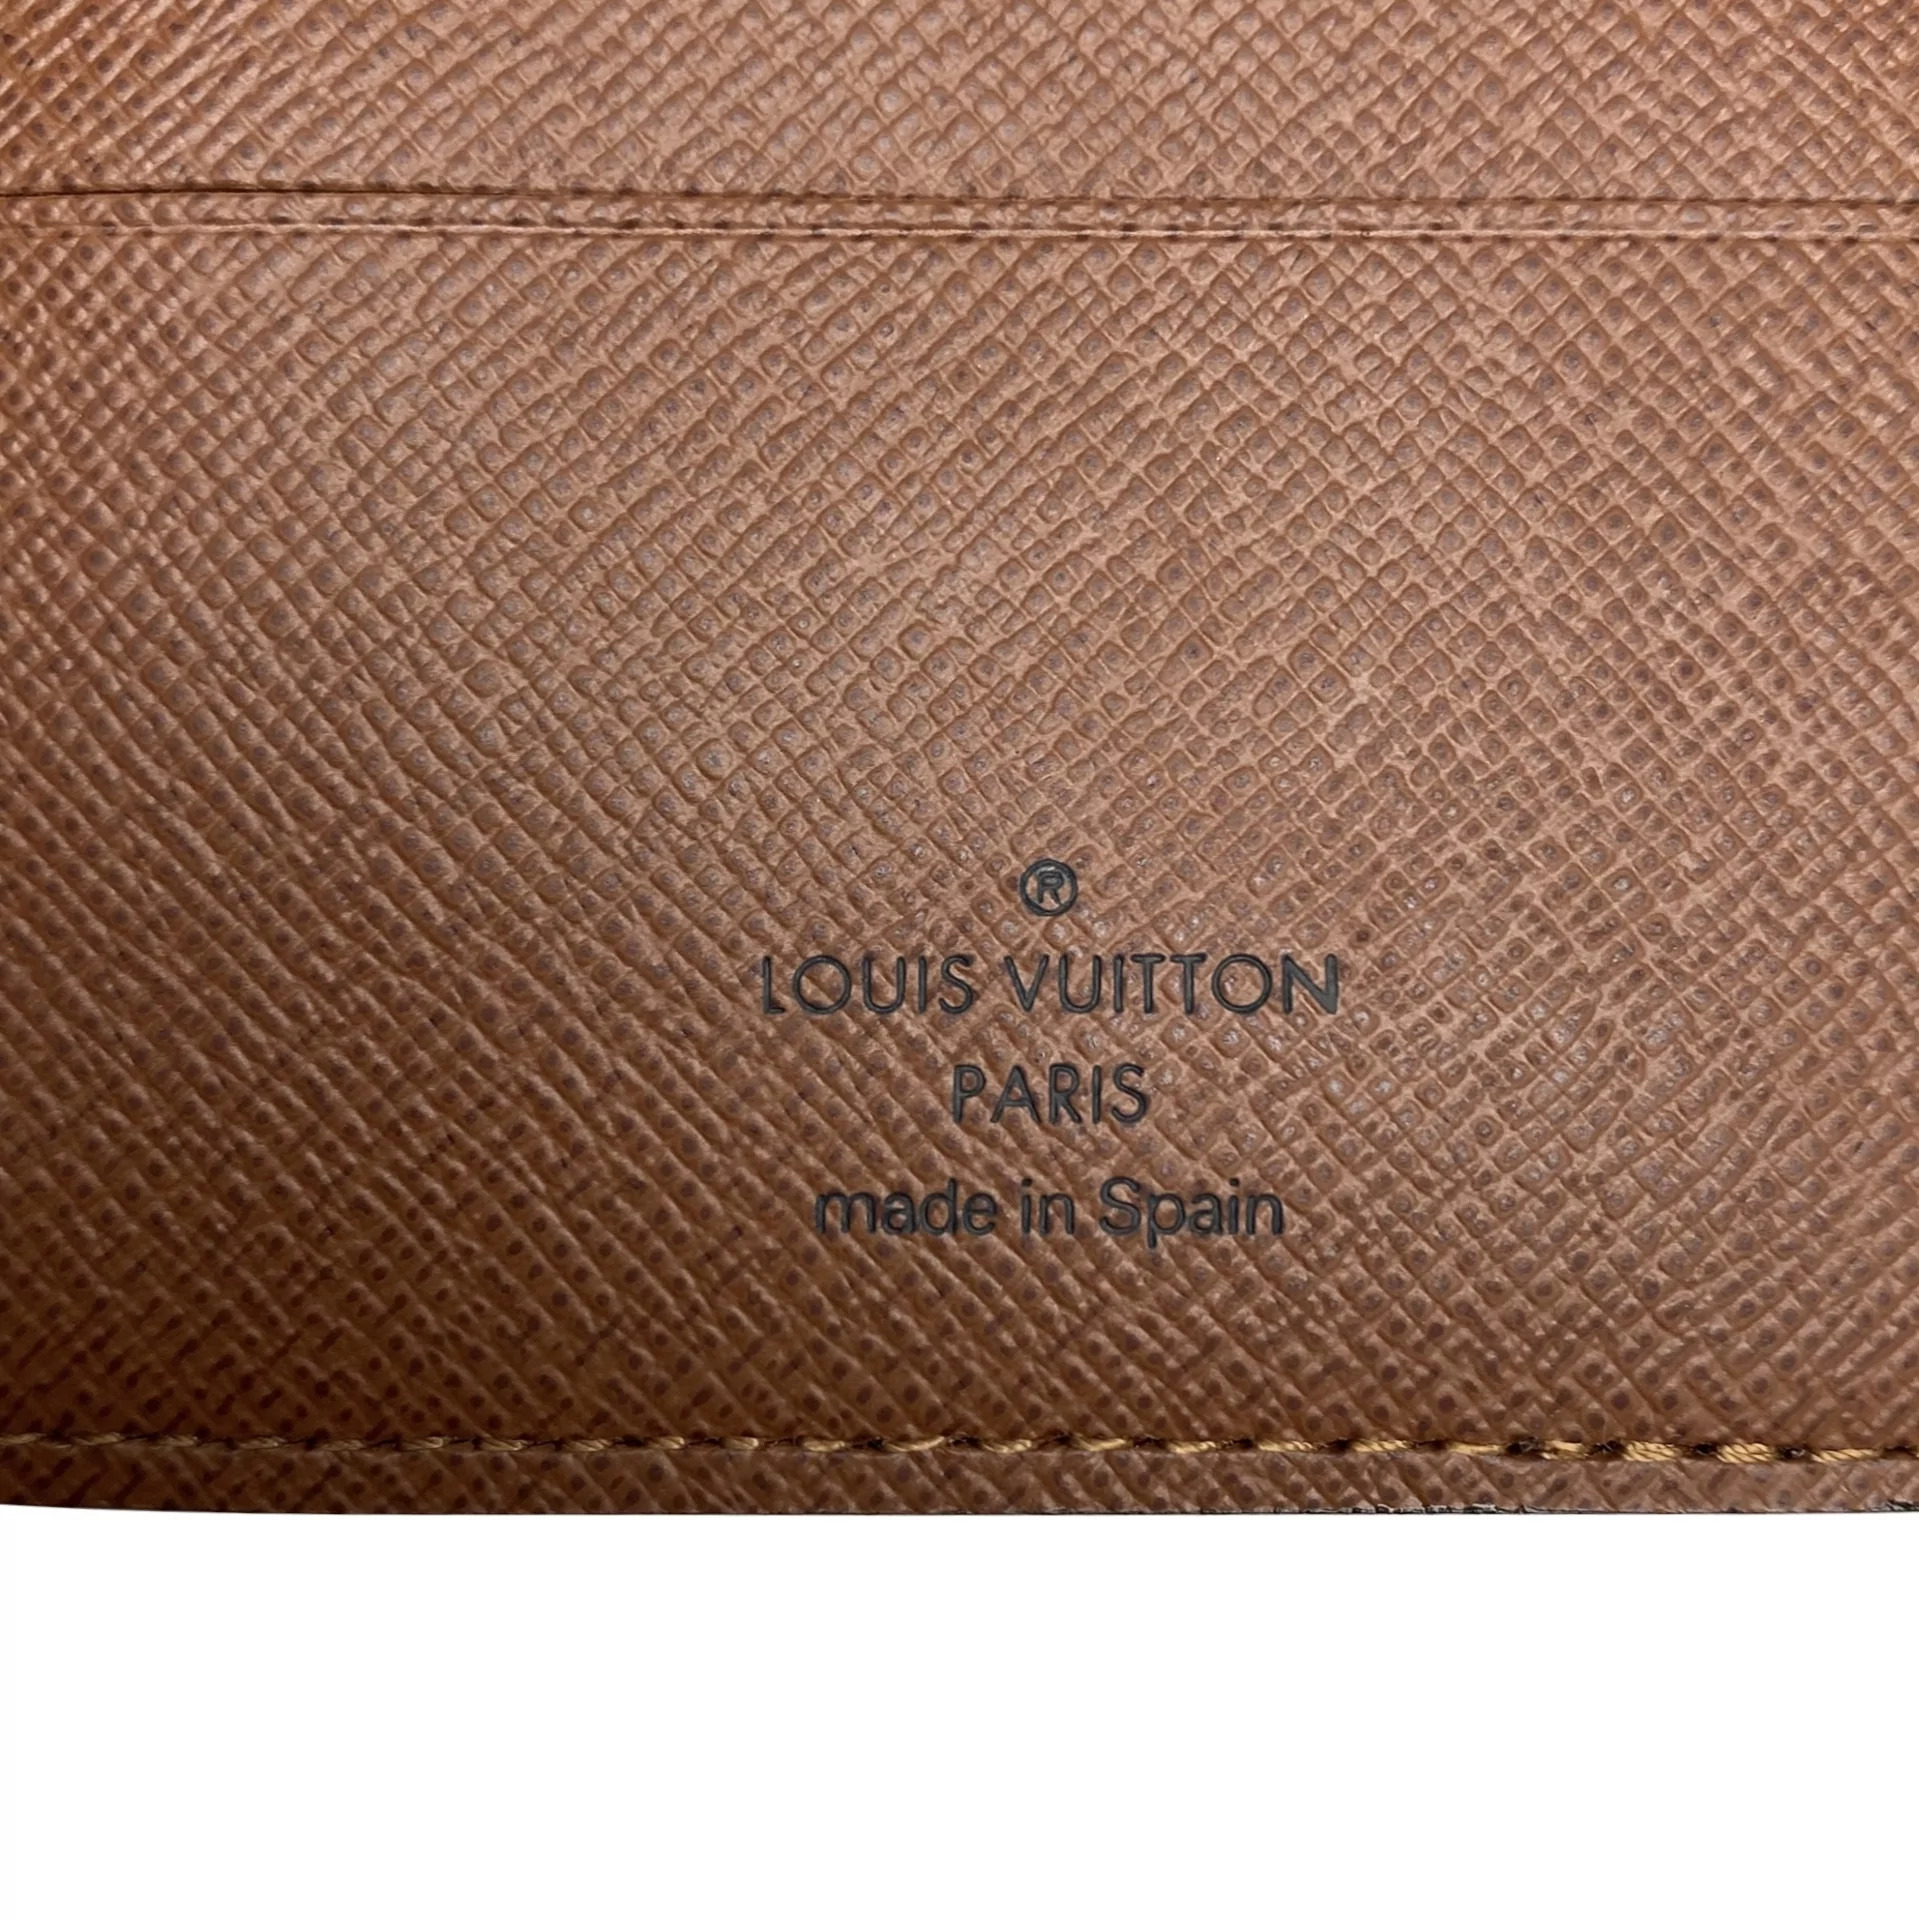 Carteira Louis Vuitton Porte-Billets 10